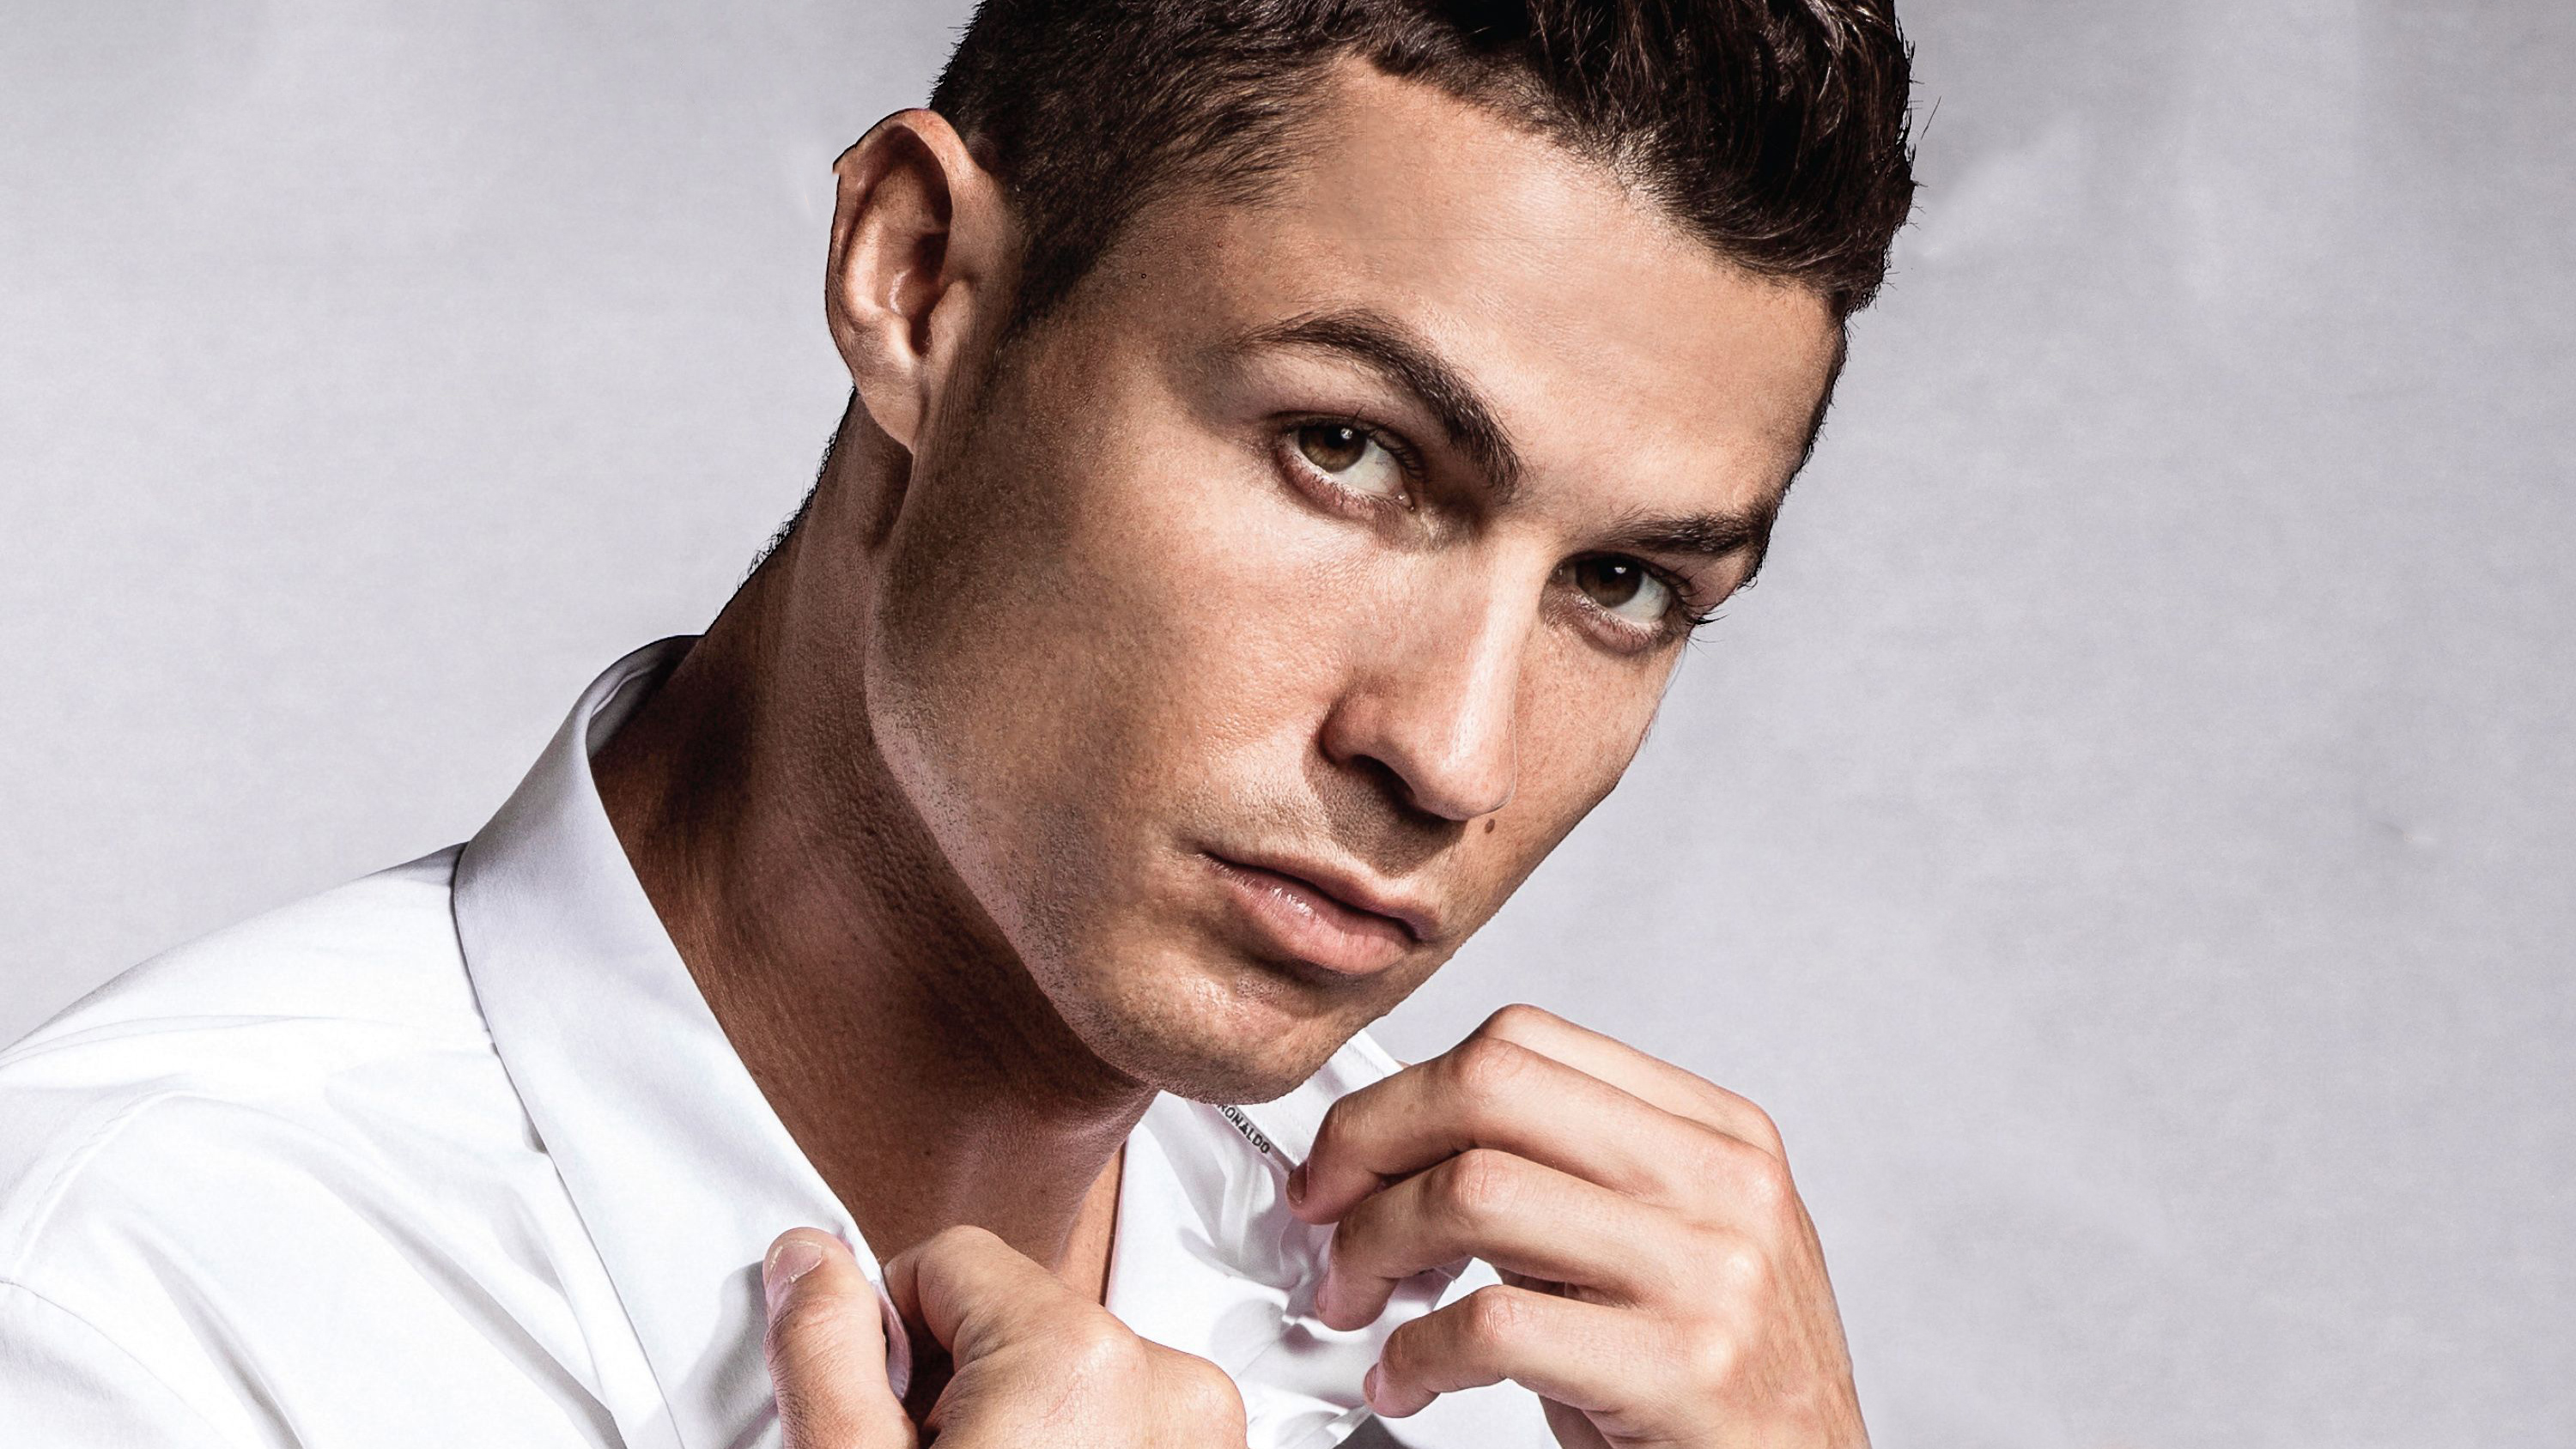 Cristiano Ronaldo 2020 1680x1050 Resolution HD 4k Wallpaper, Image, Background, Photo and Picture